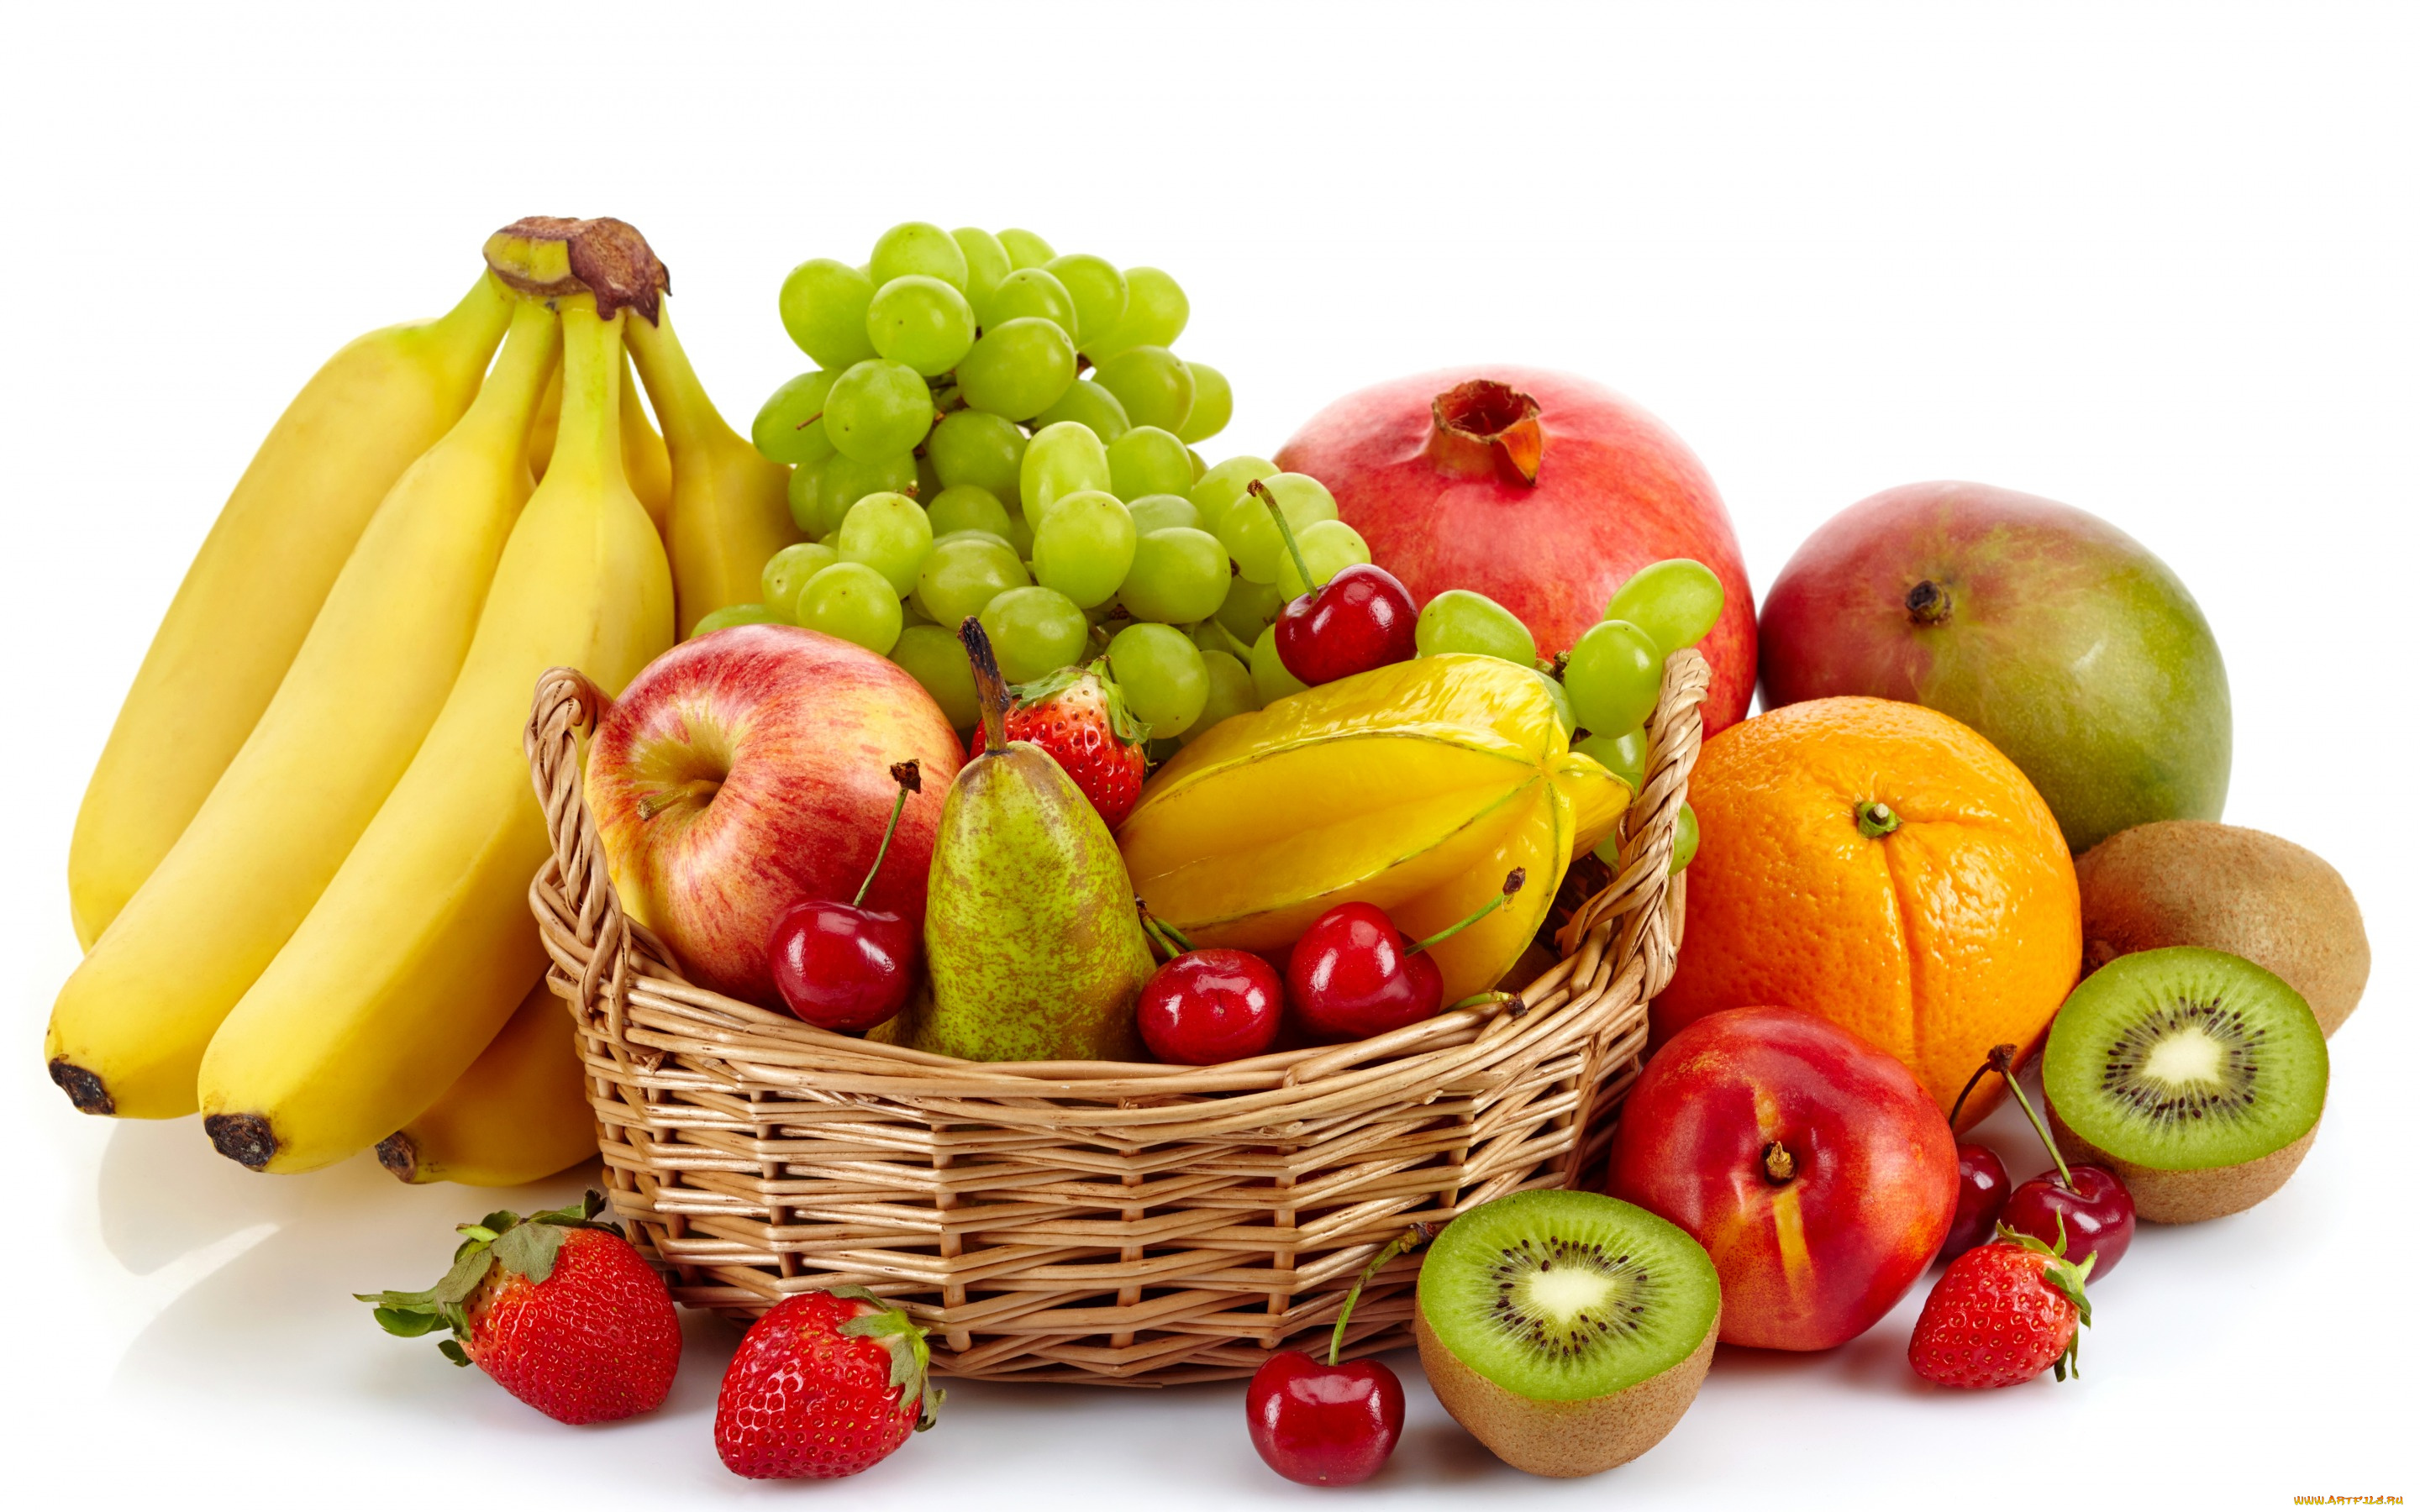 еда, фрукты, , ягоды, клубника, бананы, виноград, яблоки, вишня, груша, корзина, апельсин, белый, фон, ягоды, гранат, киви